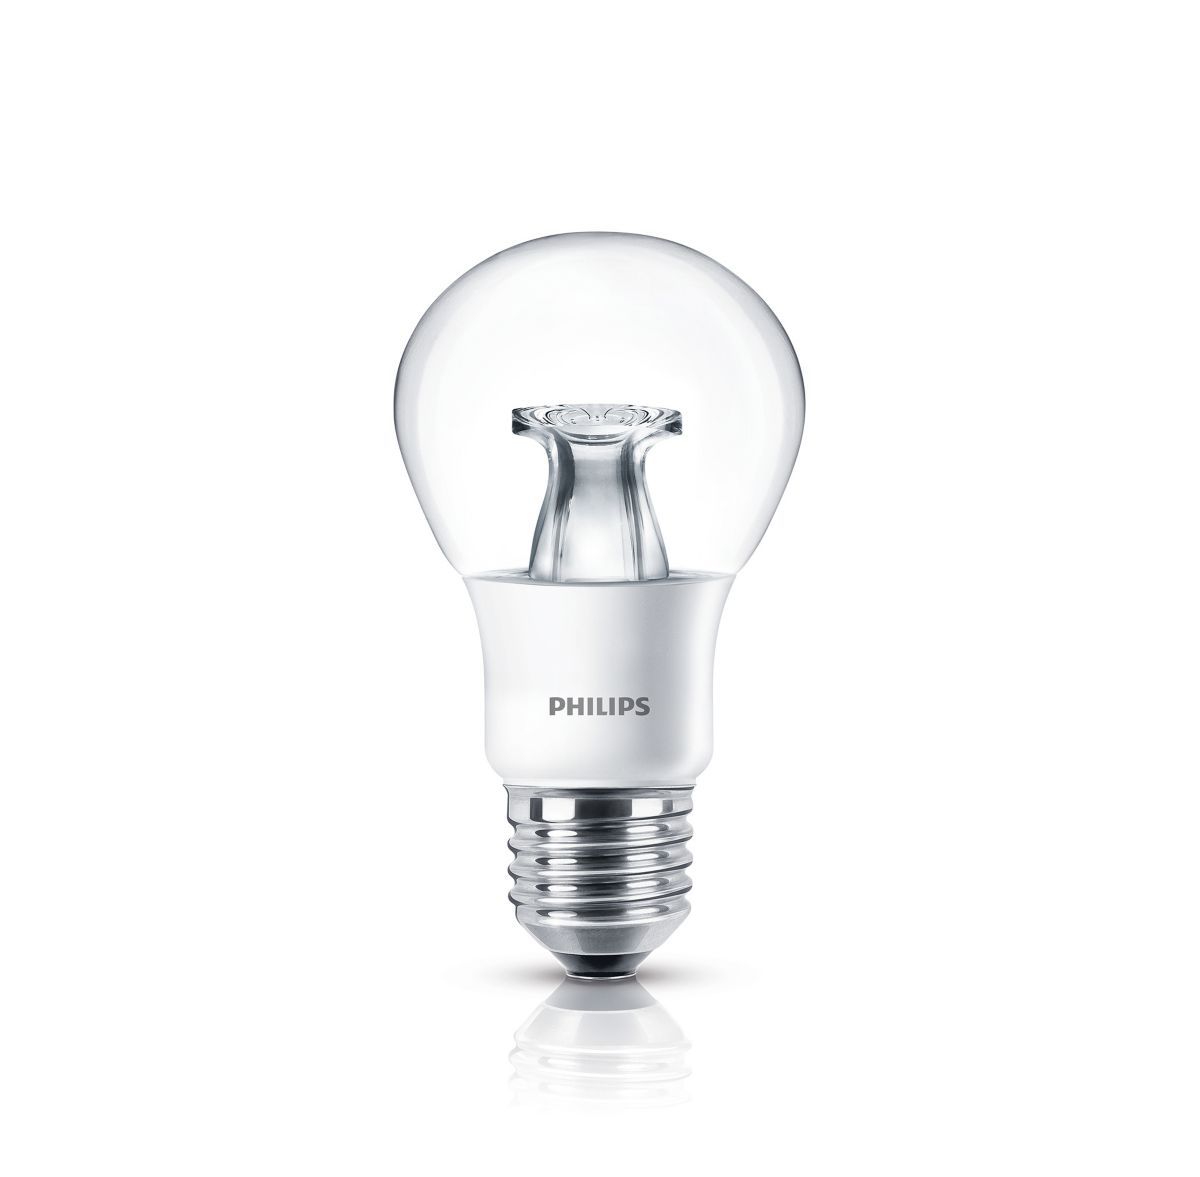 Philips LED Leuchtmittel Master LEDbulb 13W = 75W E27 warmweiß 2700K DIMMBAR